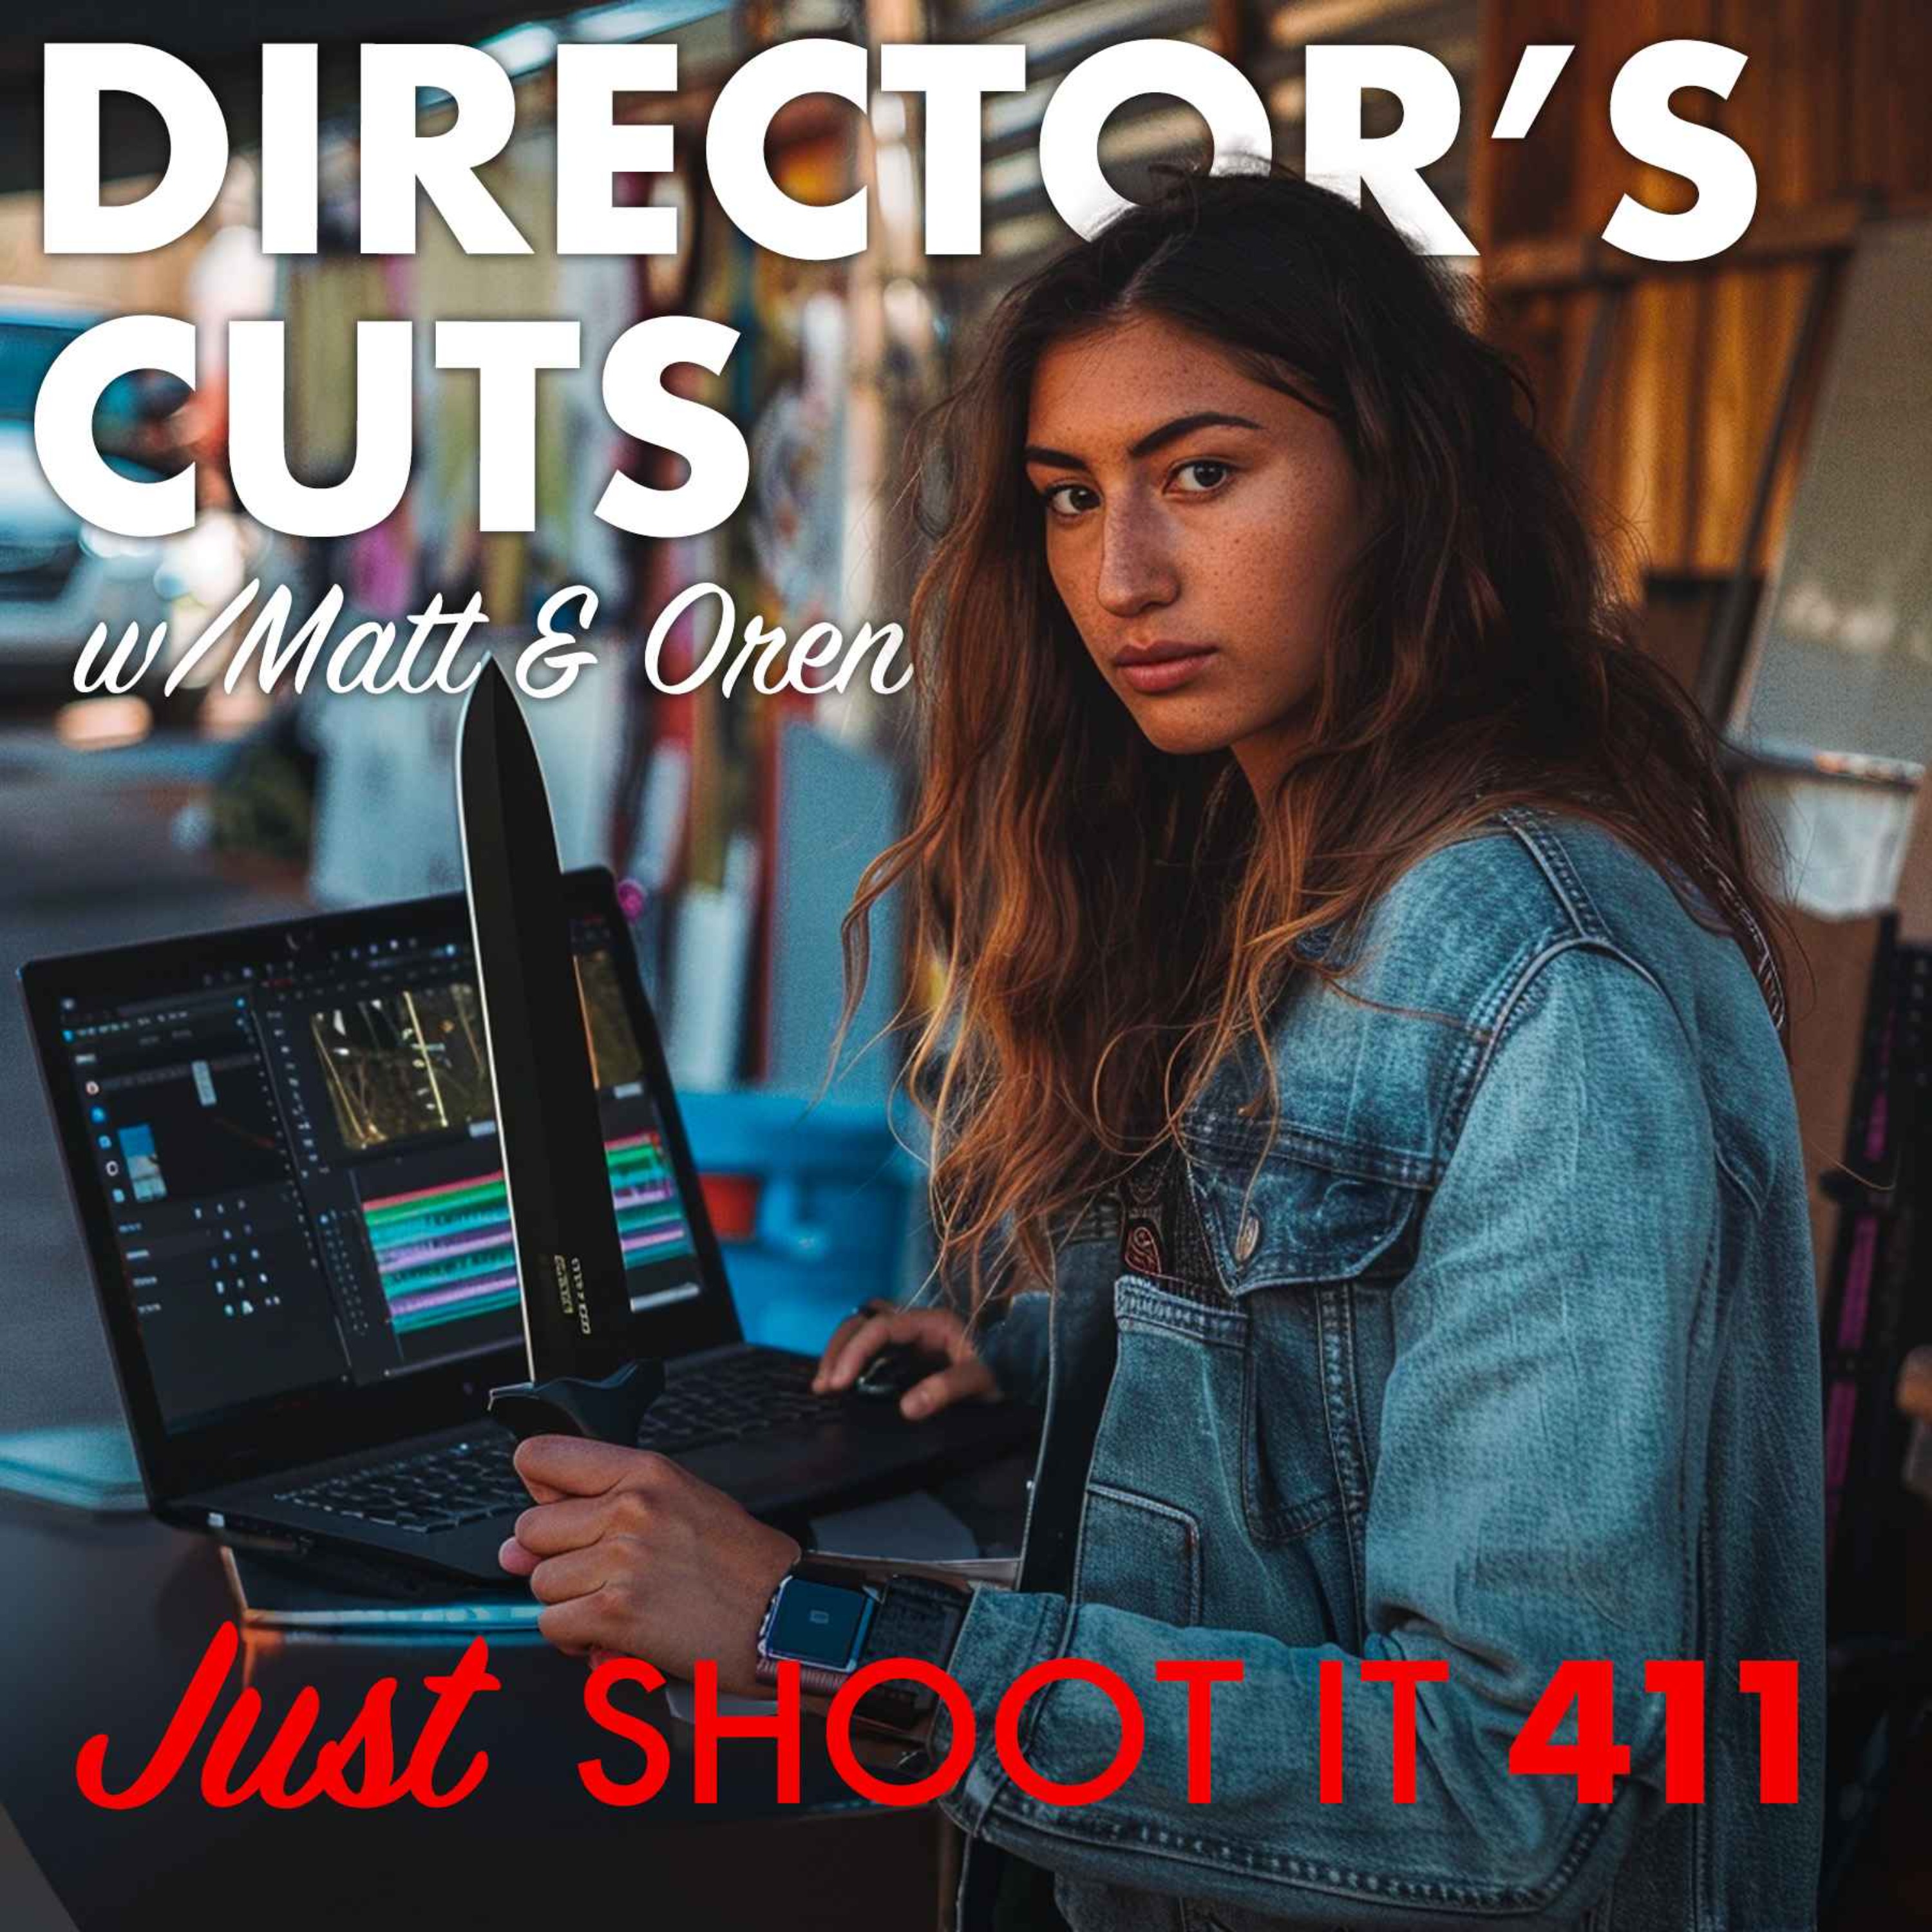 Director's Cuts w/Matt & Oren - Just Shoot It 411